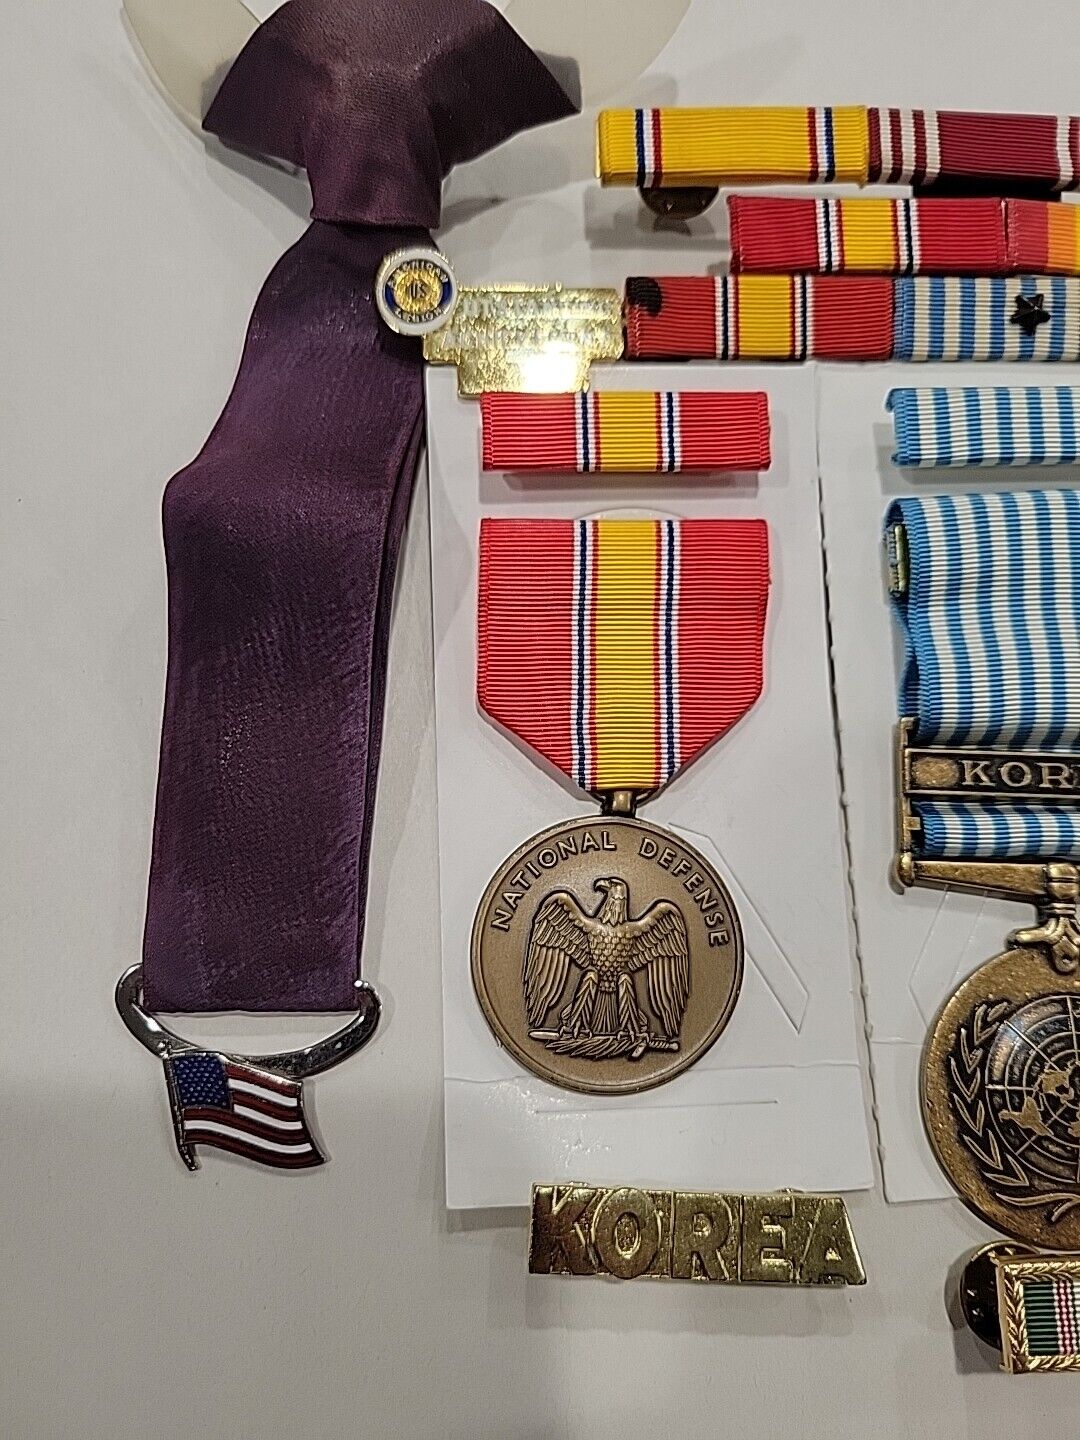 Army Korean War Service 3 Medal Set with Ribbon Bar -ROK Presidential Unit Award